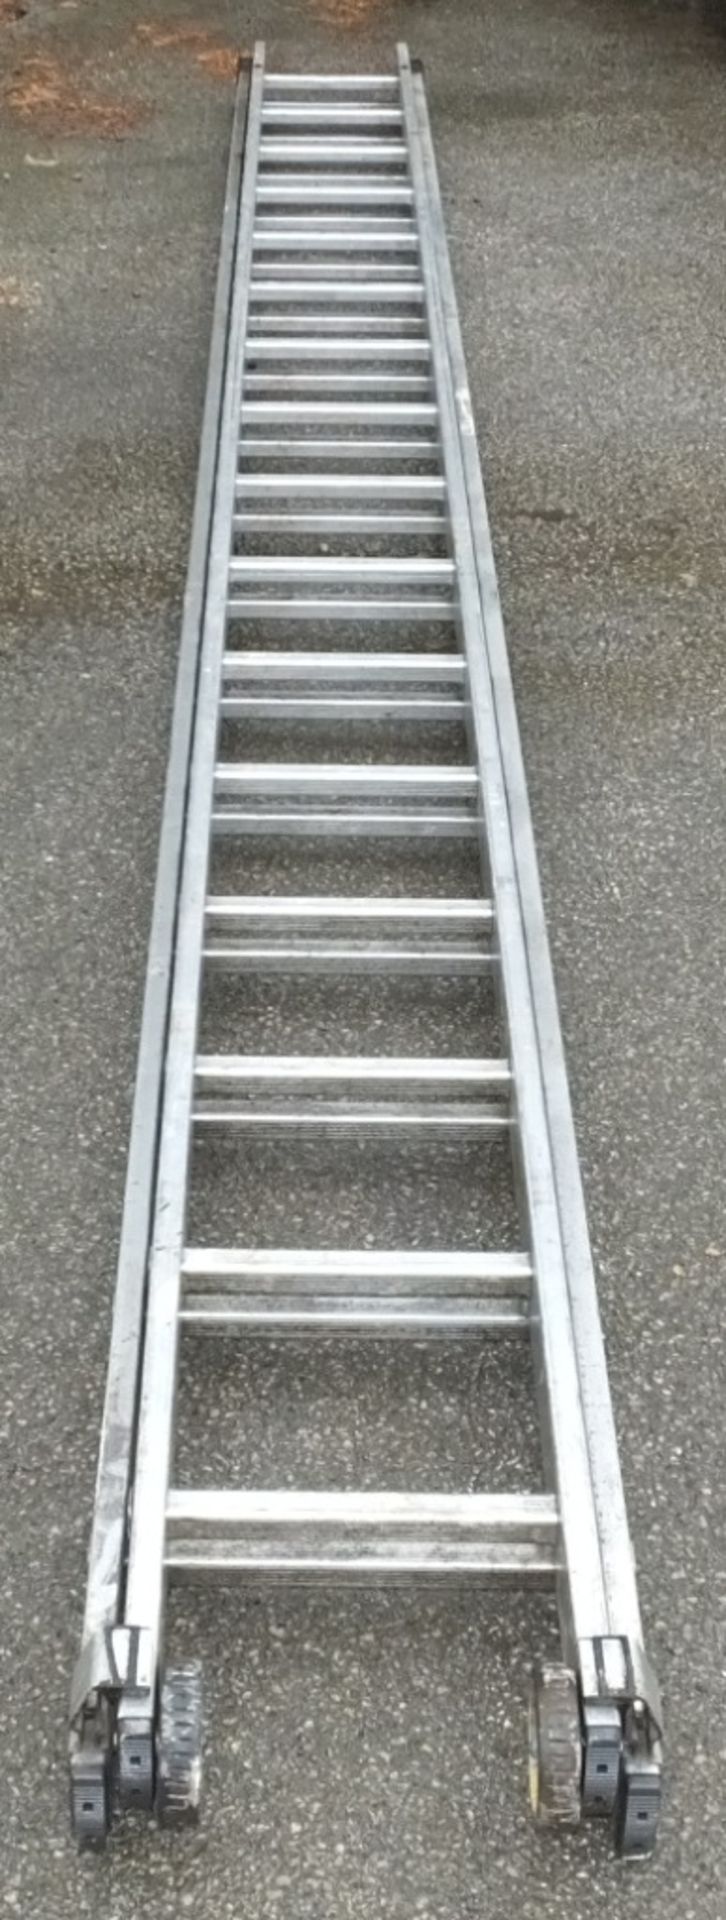 15ft 2 piece extending ladder - Image 3 of 3